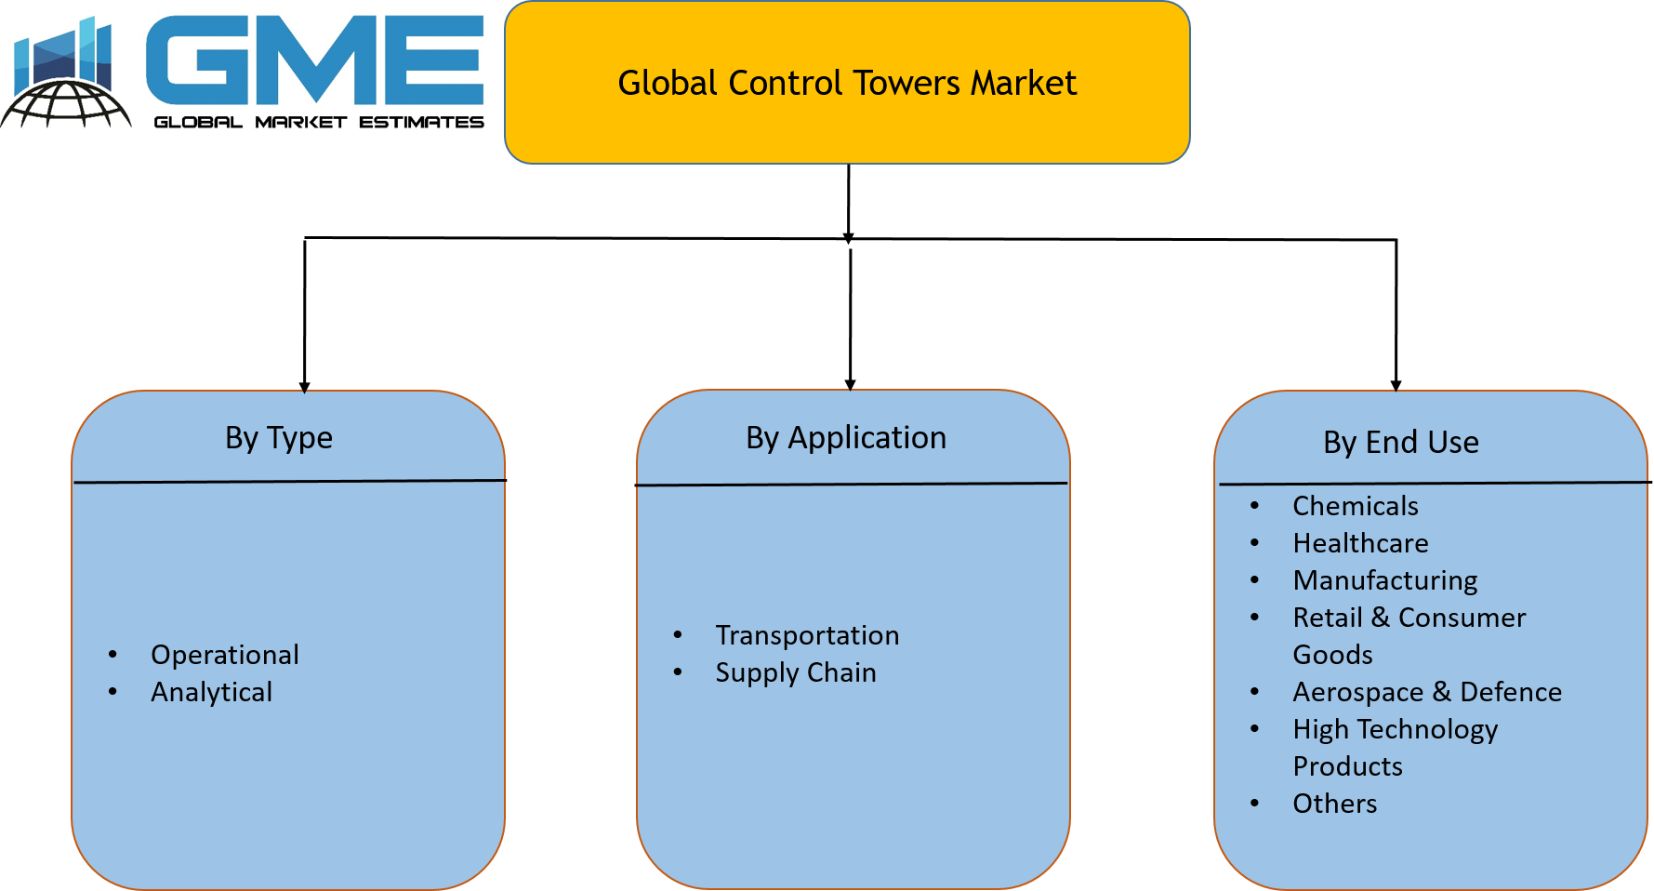 Global Control Towers Market Segmentation